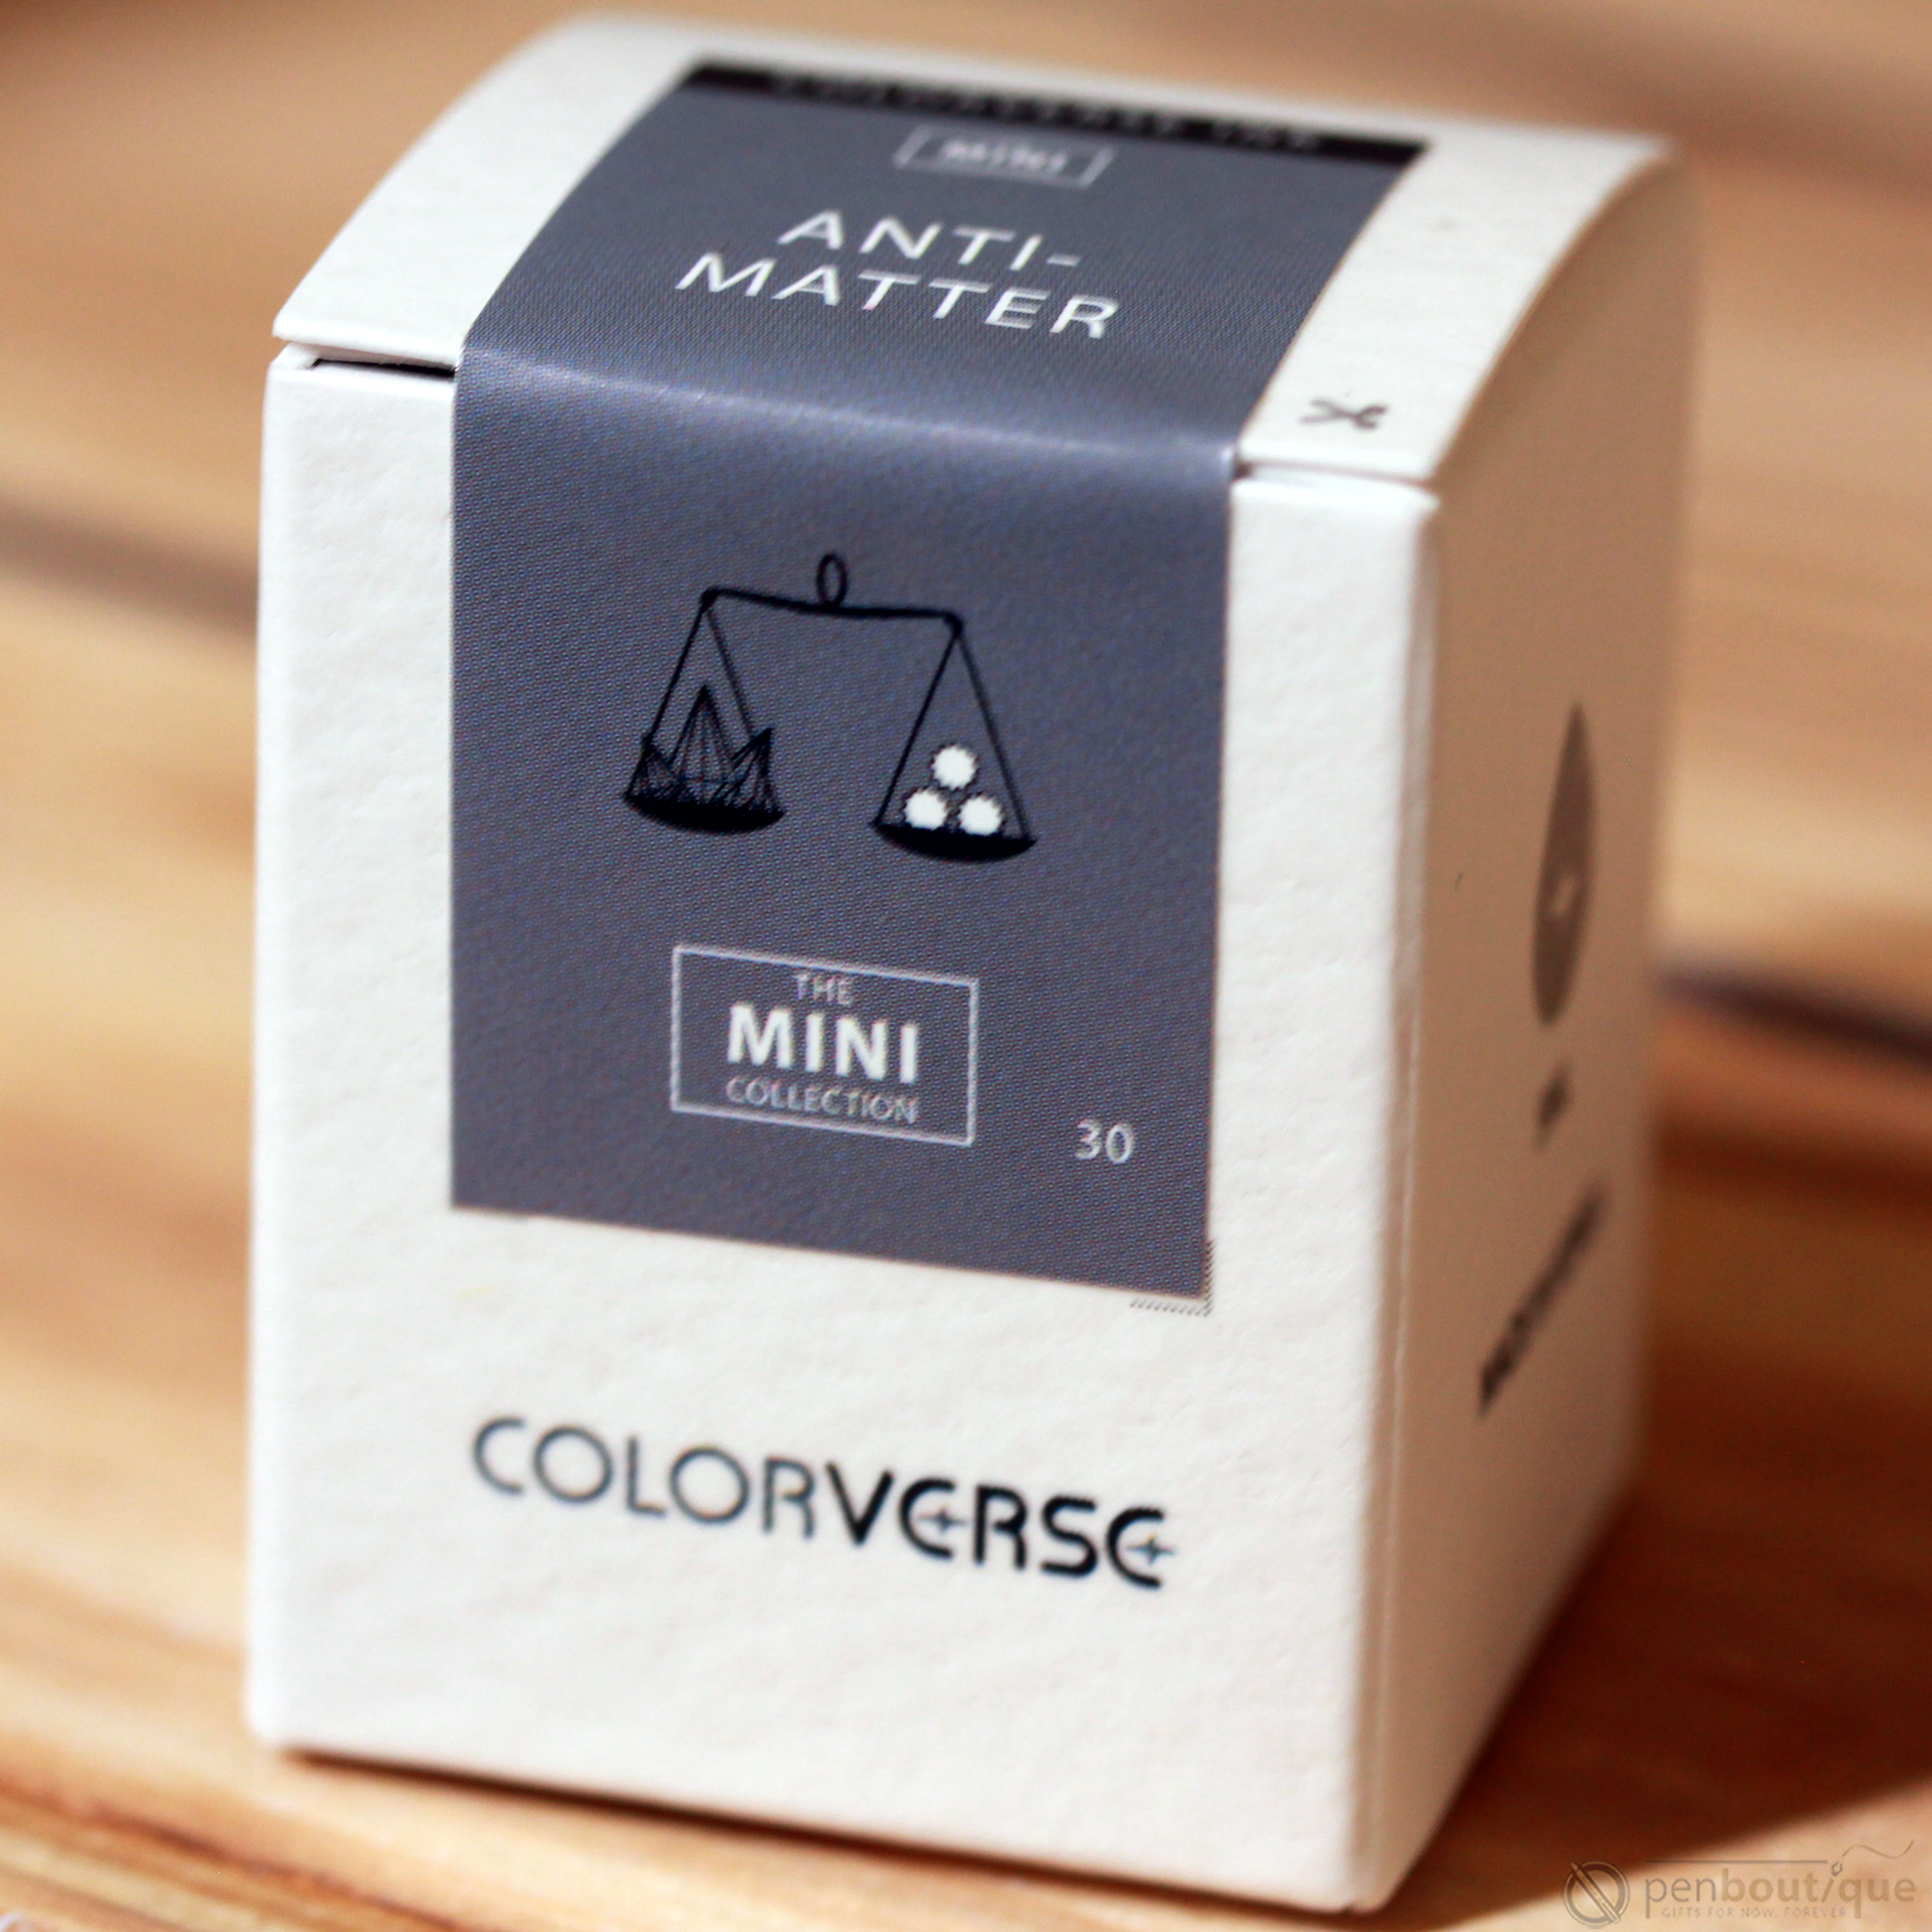 Colorverse Mini Ink - Multiverse - ANTI-MATTER - 5ml-Pen Boutique Ltd